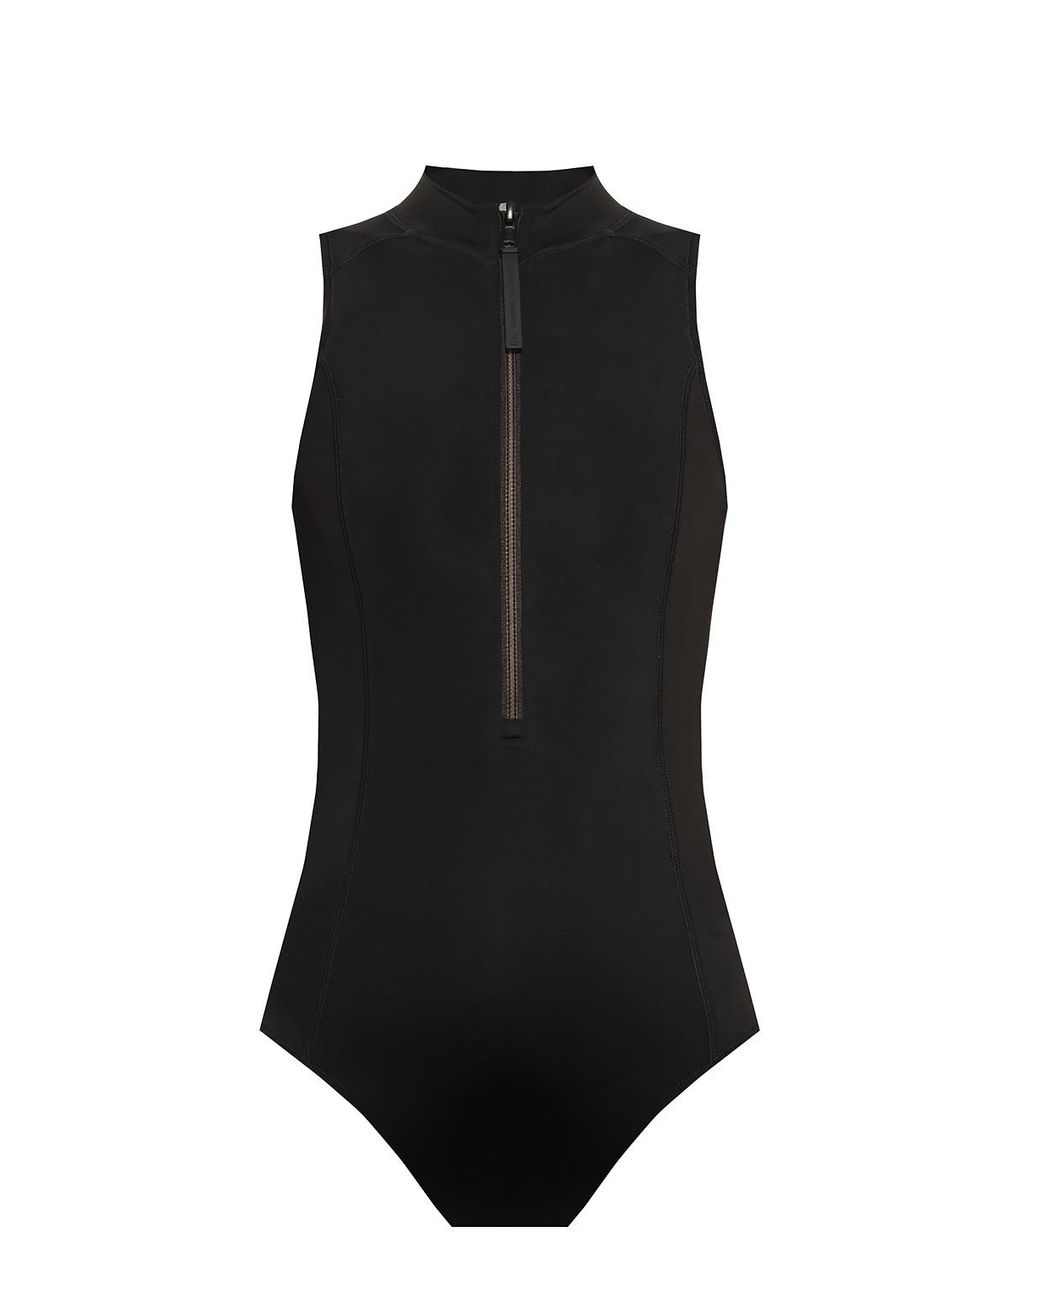 Y-3 One-piece Swimsuit in Black - Lyst